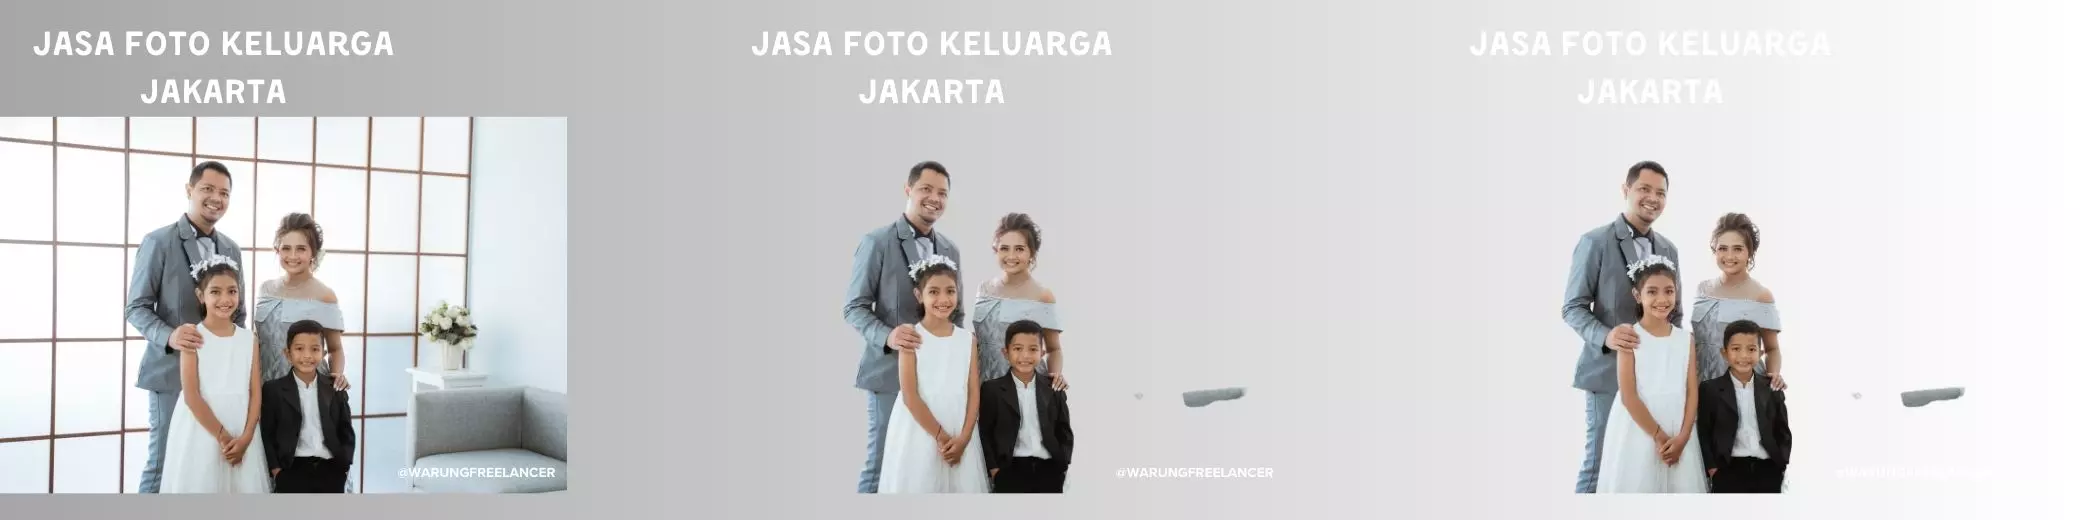 Jasa Foto Keluarga Jakarta